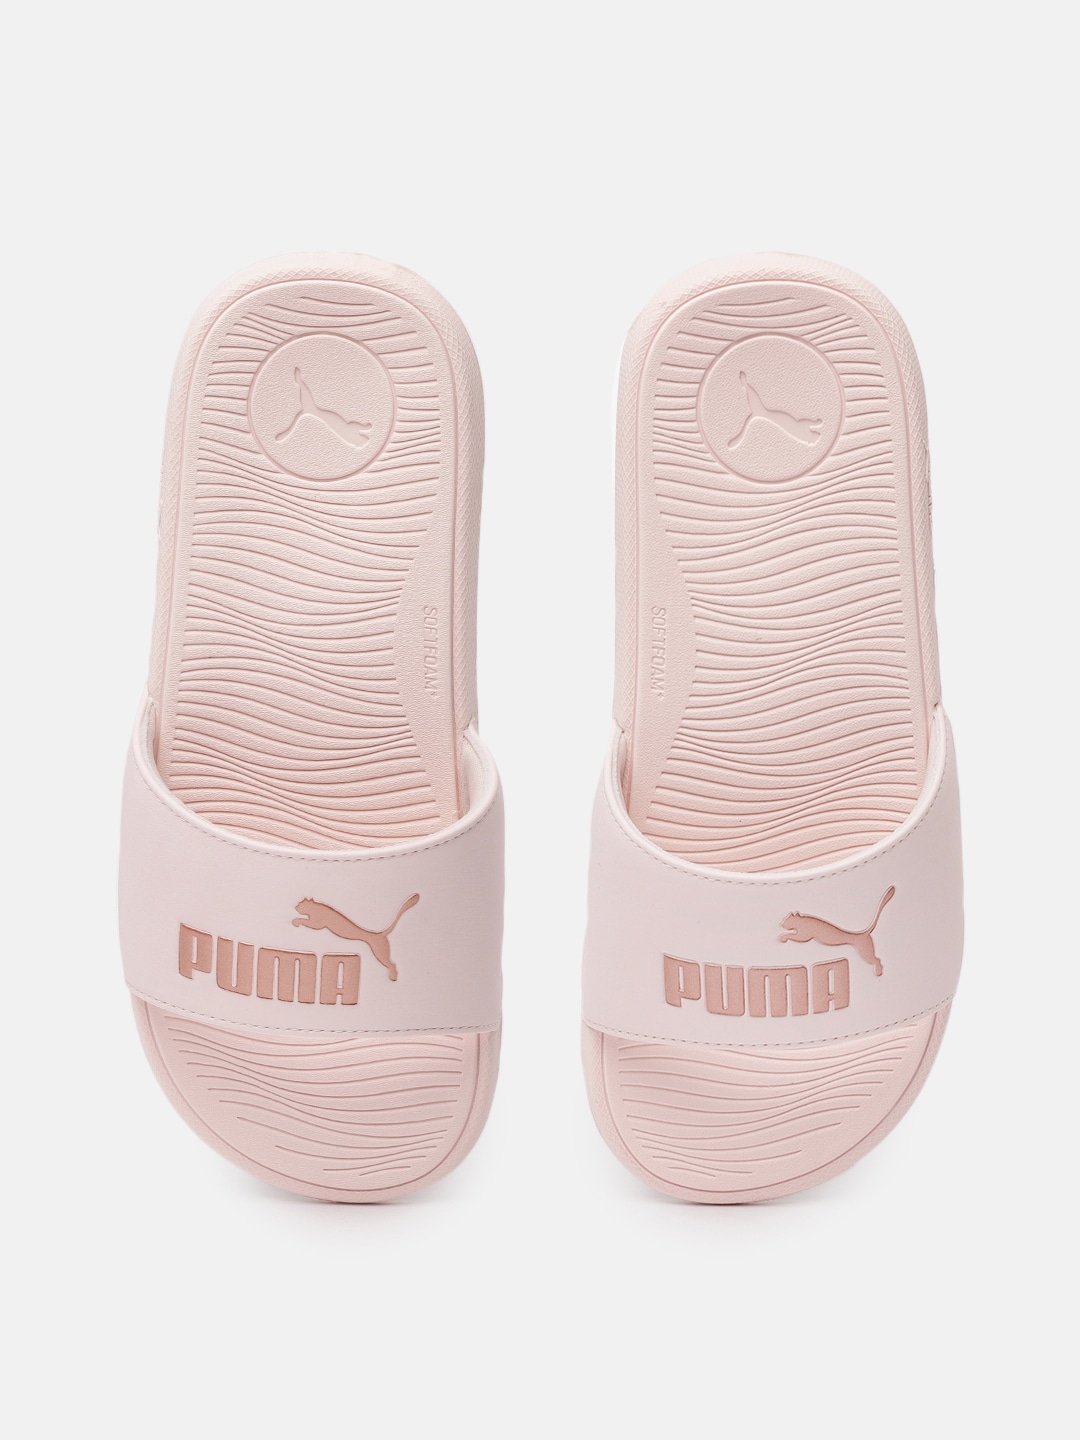 Puma Women Brand Logo Printed Sliders